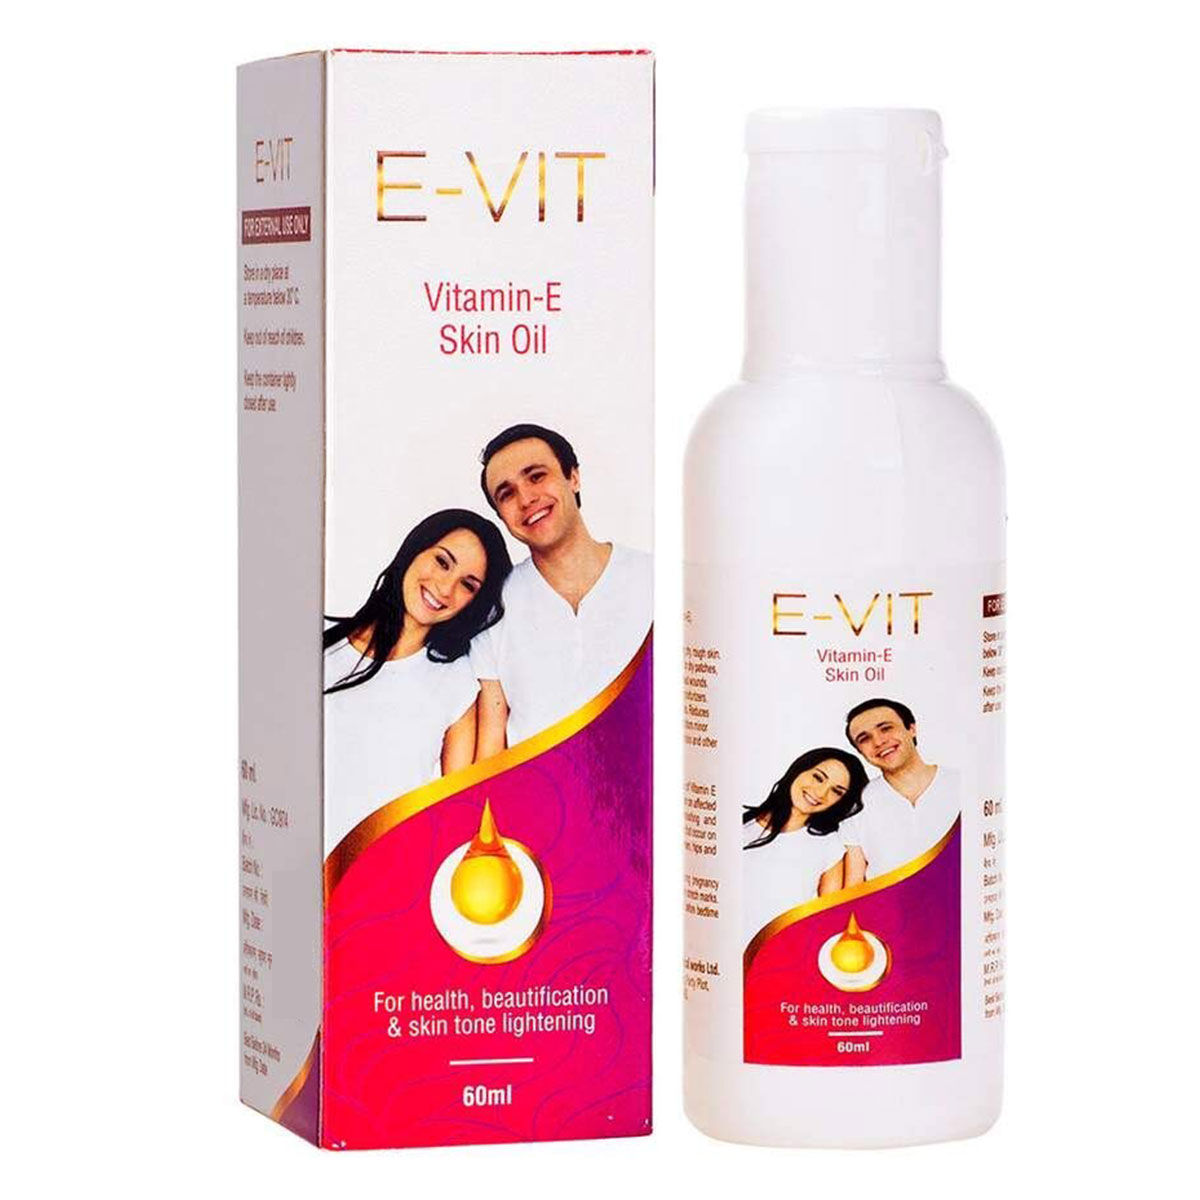 Buy Healthvit E-Vit Vitamin-E Skin Oil, 60 ml Online